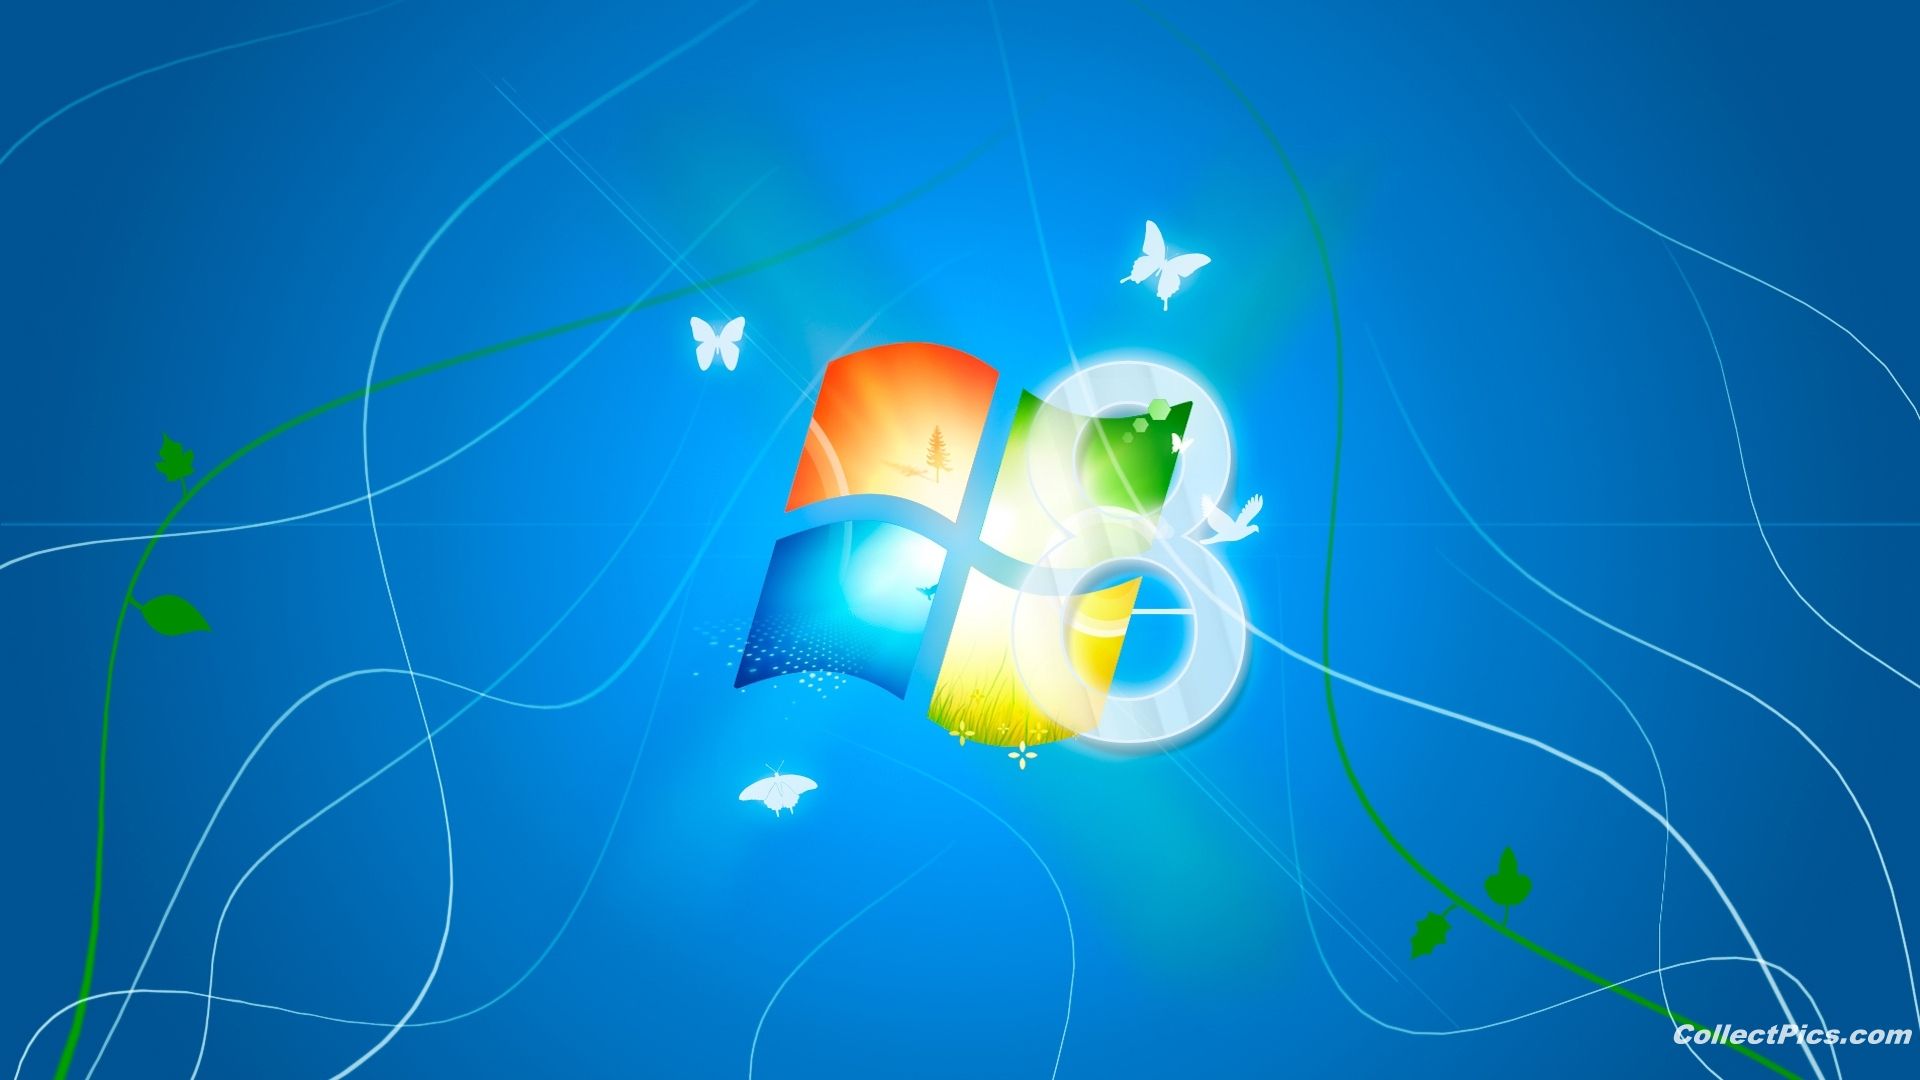 Windows 8 Alive Wallpaper HD 1920x1080 #2957